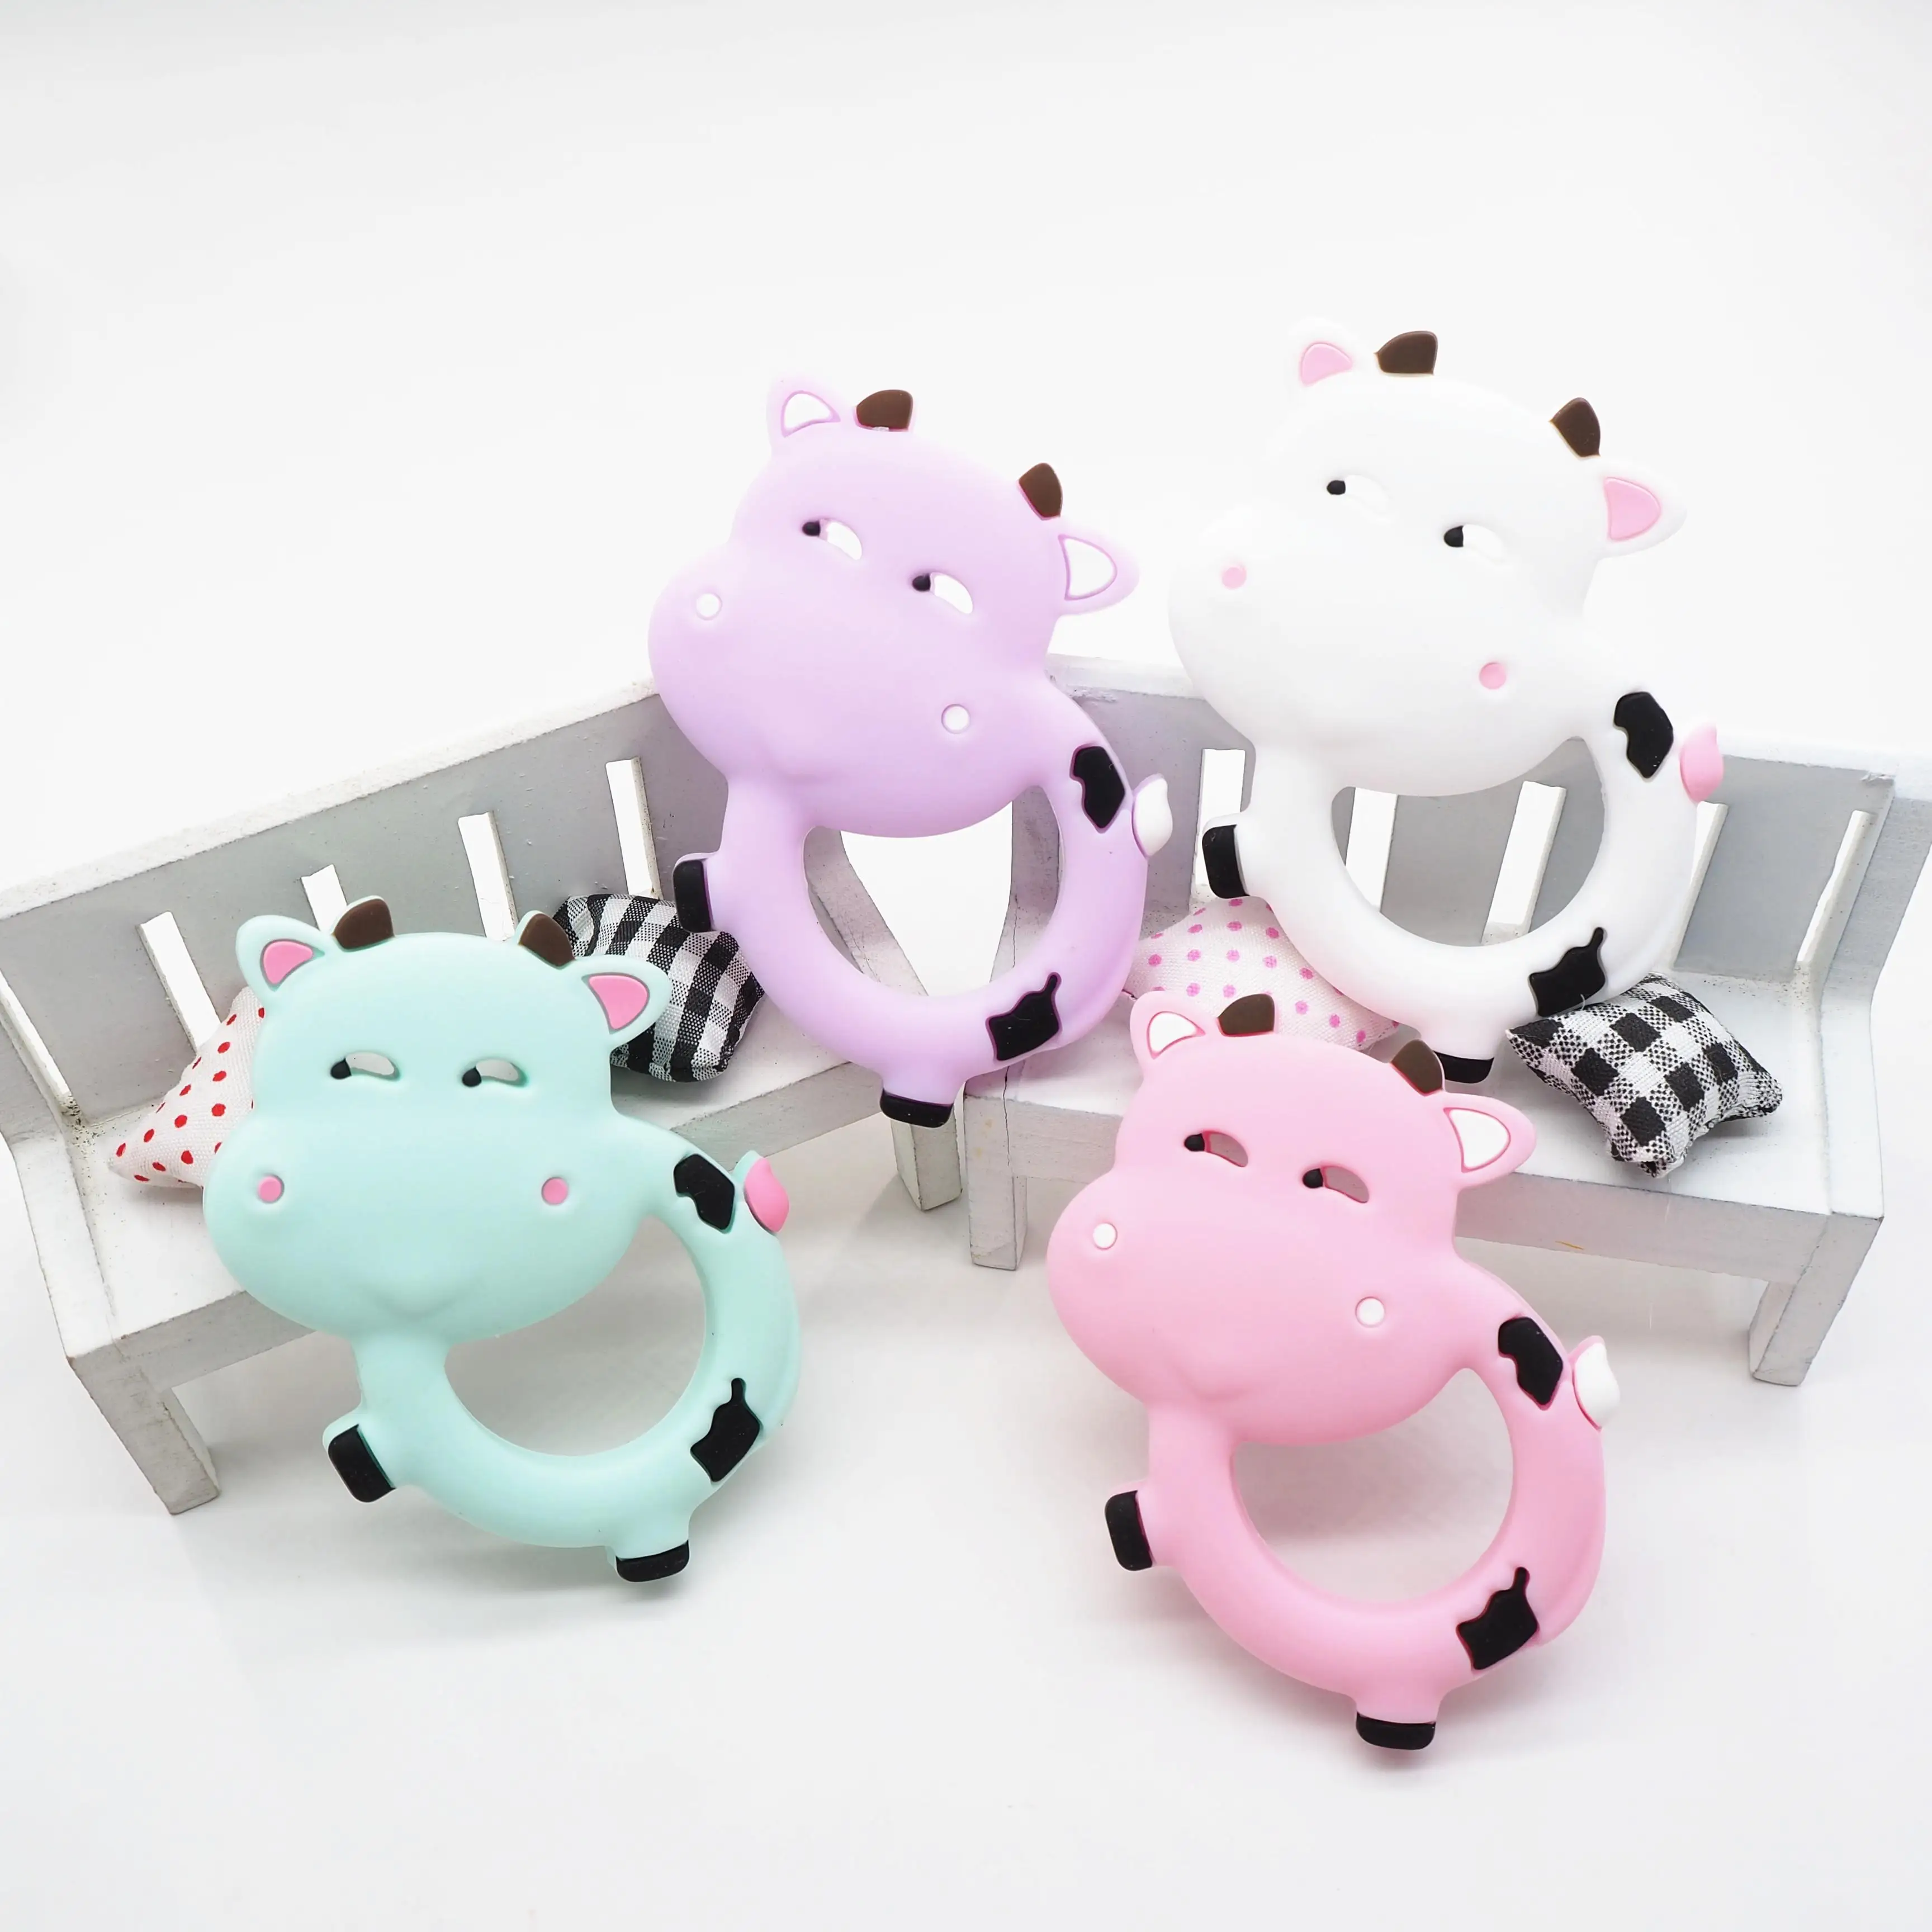 

Chenkai 1PC Silicone Milk Cow Teether DIY Baby Shower Chewing Pendant Nursing Sensory Animal Teething Pacifier Dummy Toy Gfit